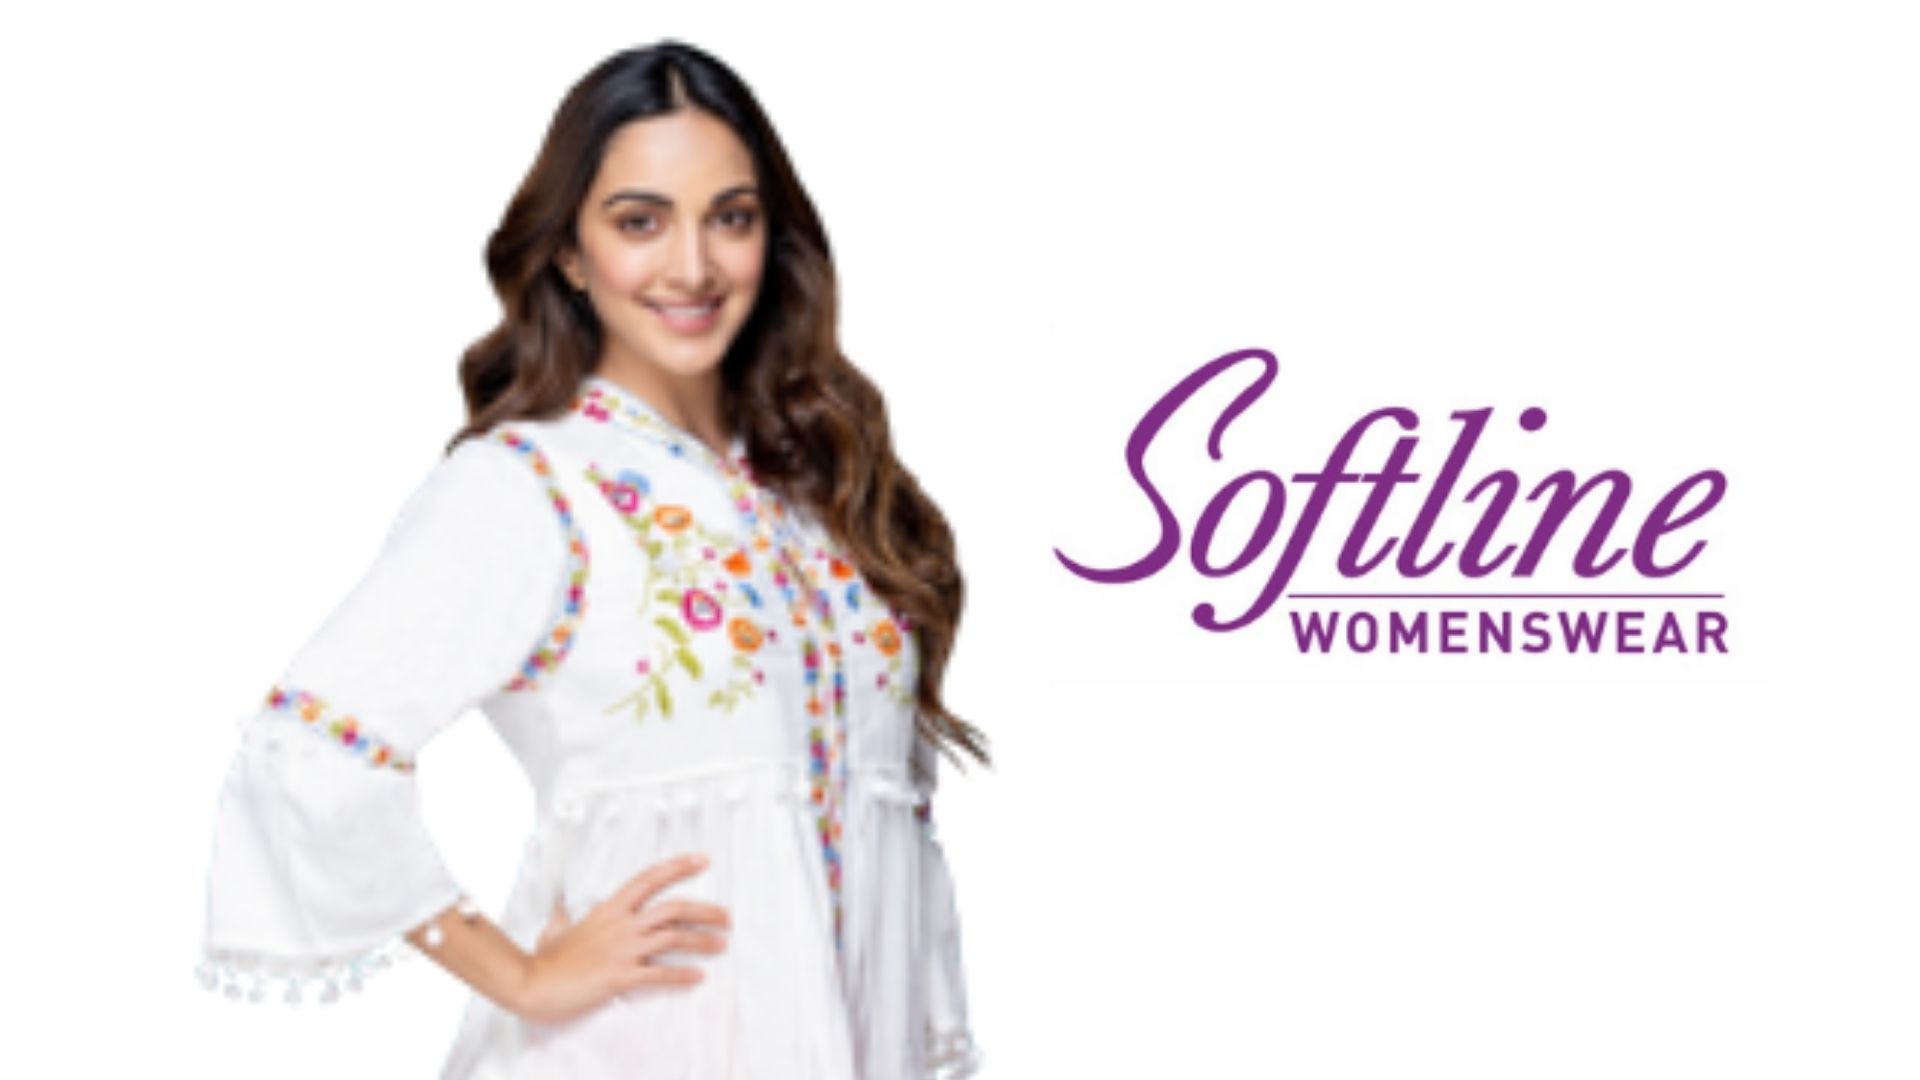 Kiara Advani is Softline Womenswear brand ambassador - MediaBrief